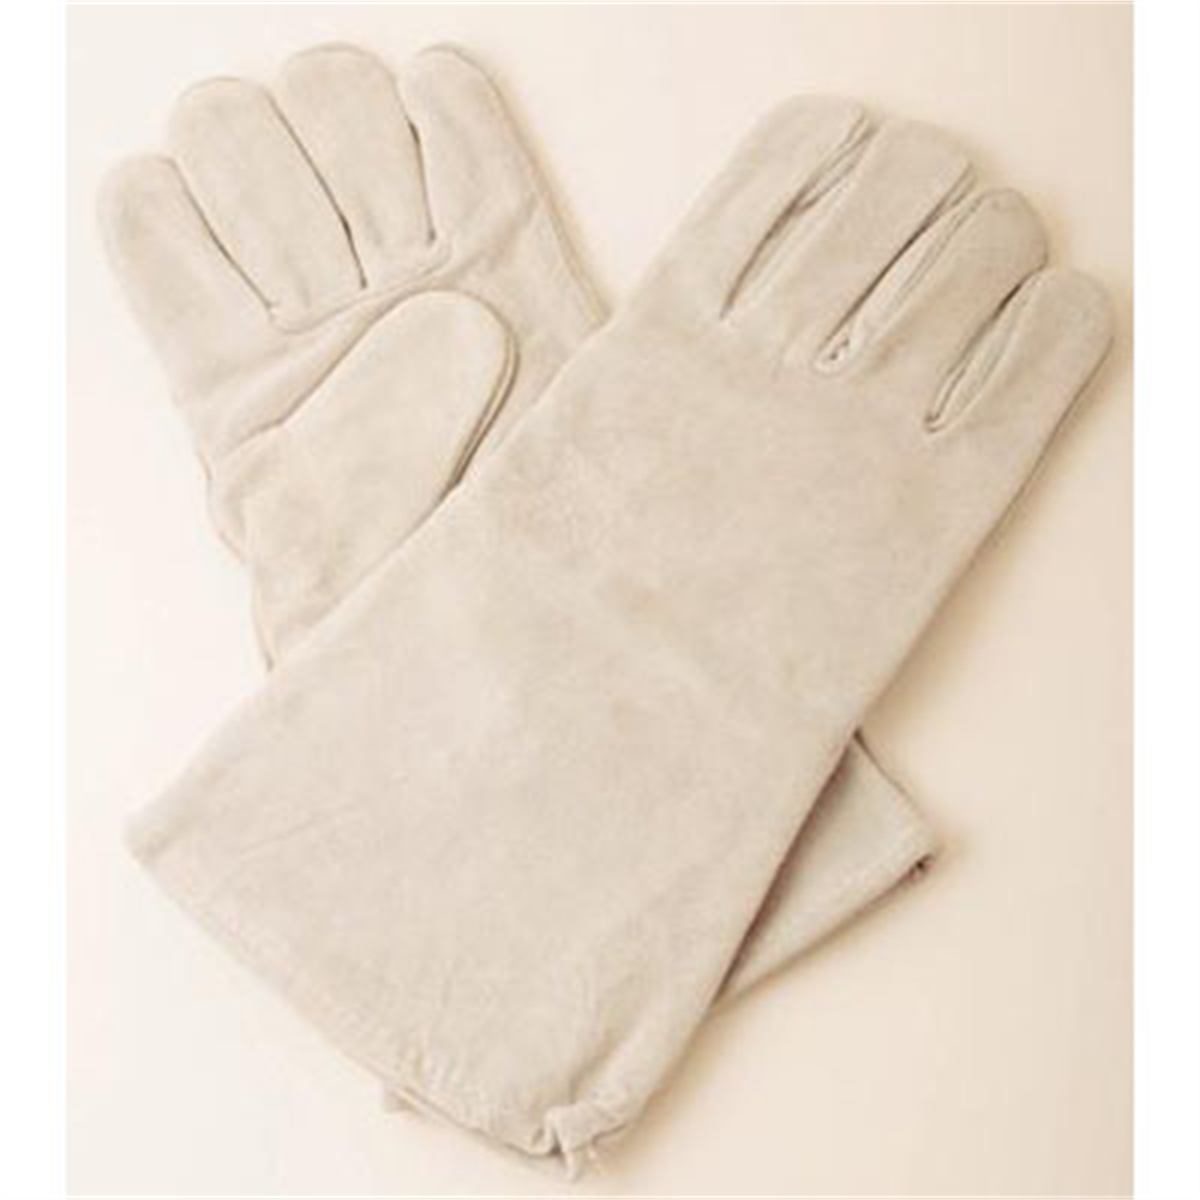 Welding Gloves - Grey Leather Economy Minded Gloves Size Large 1